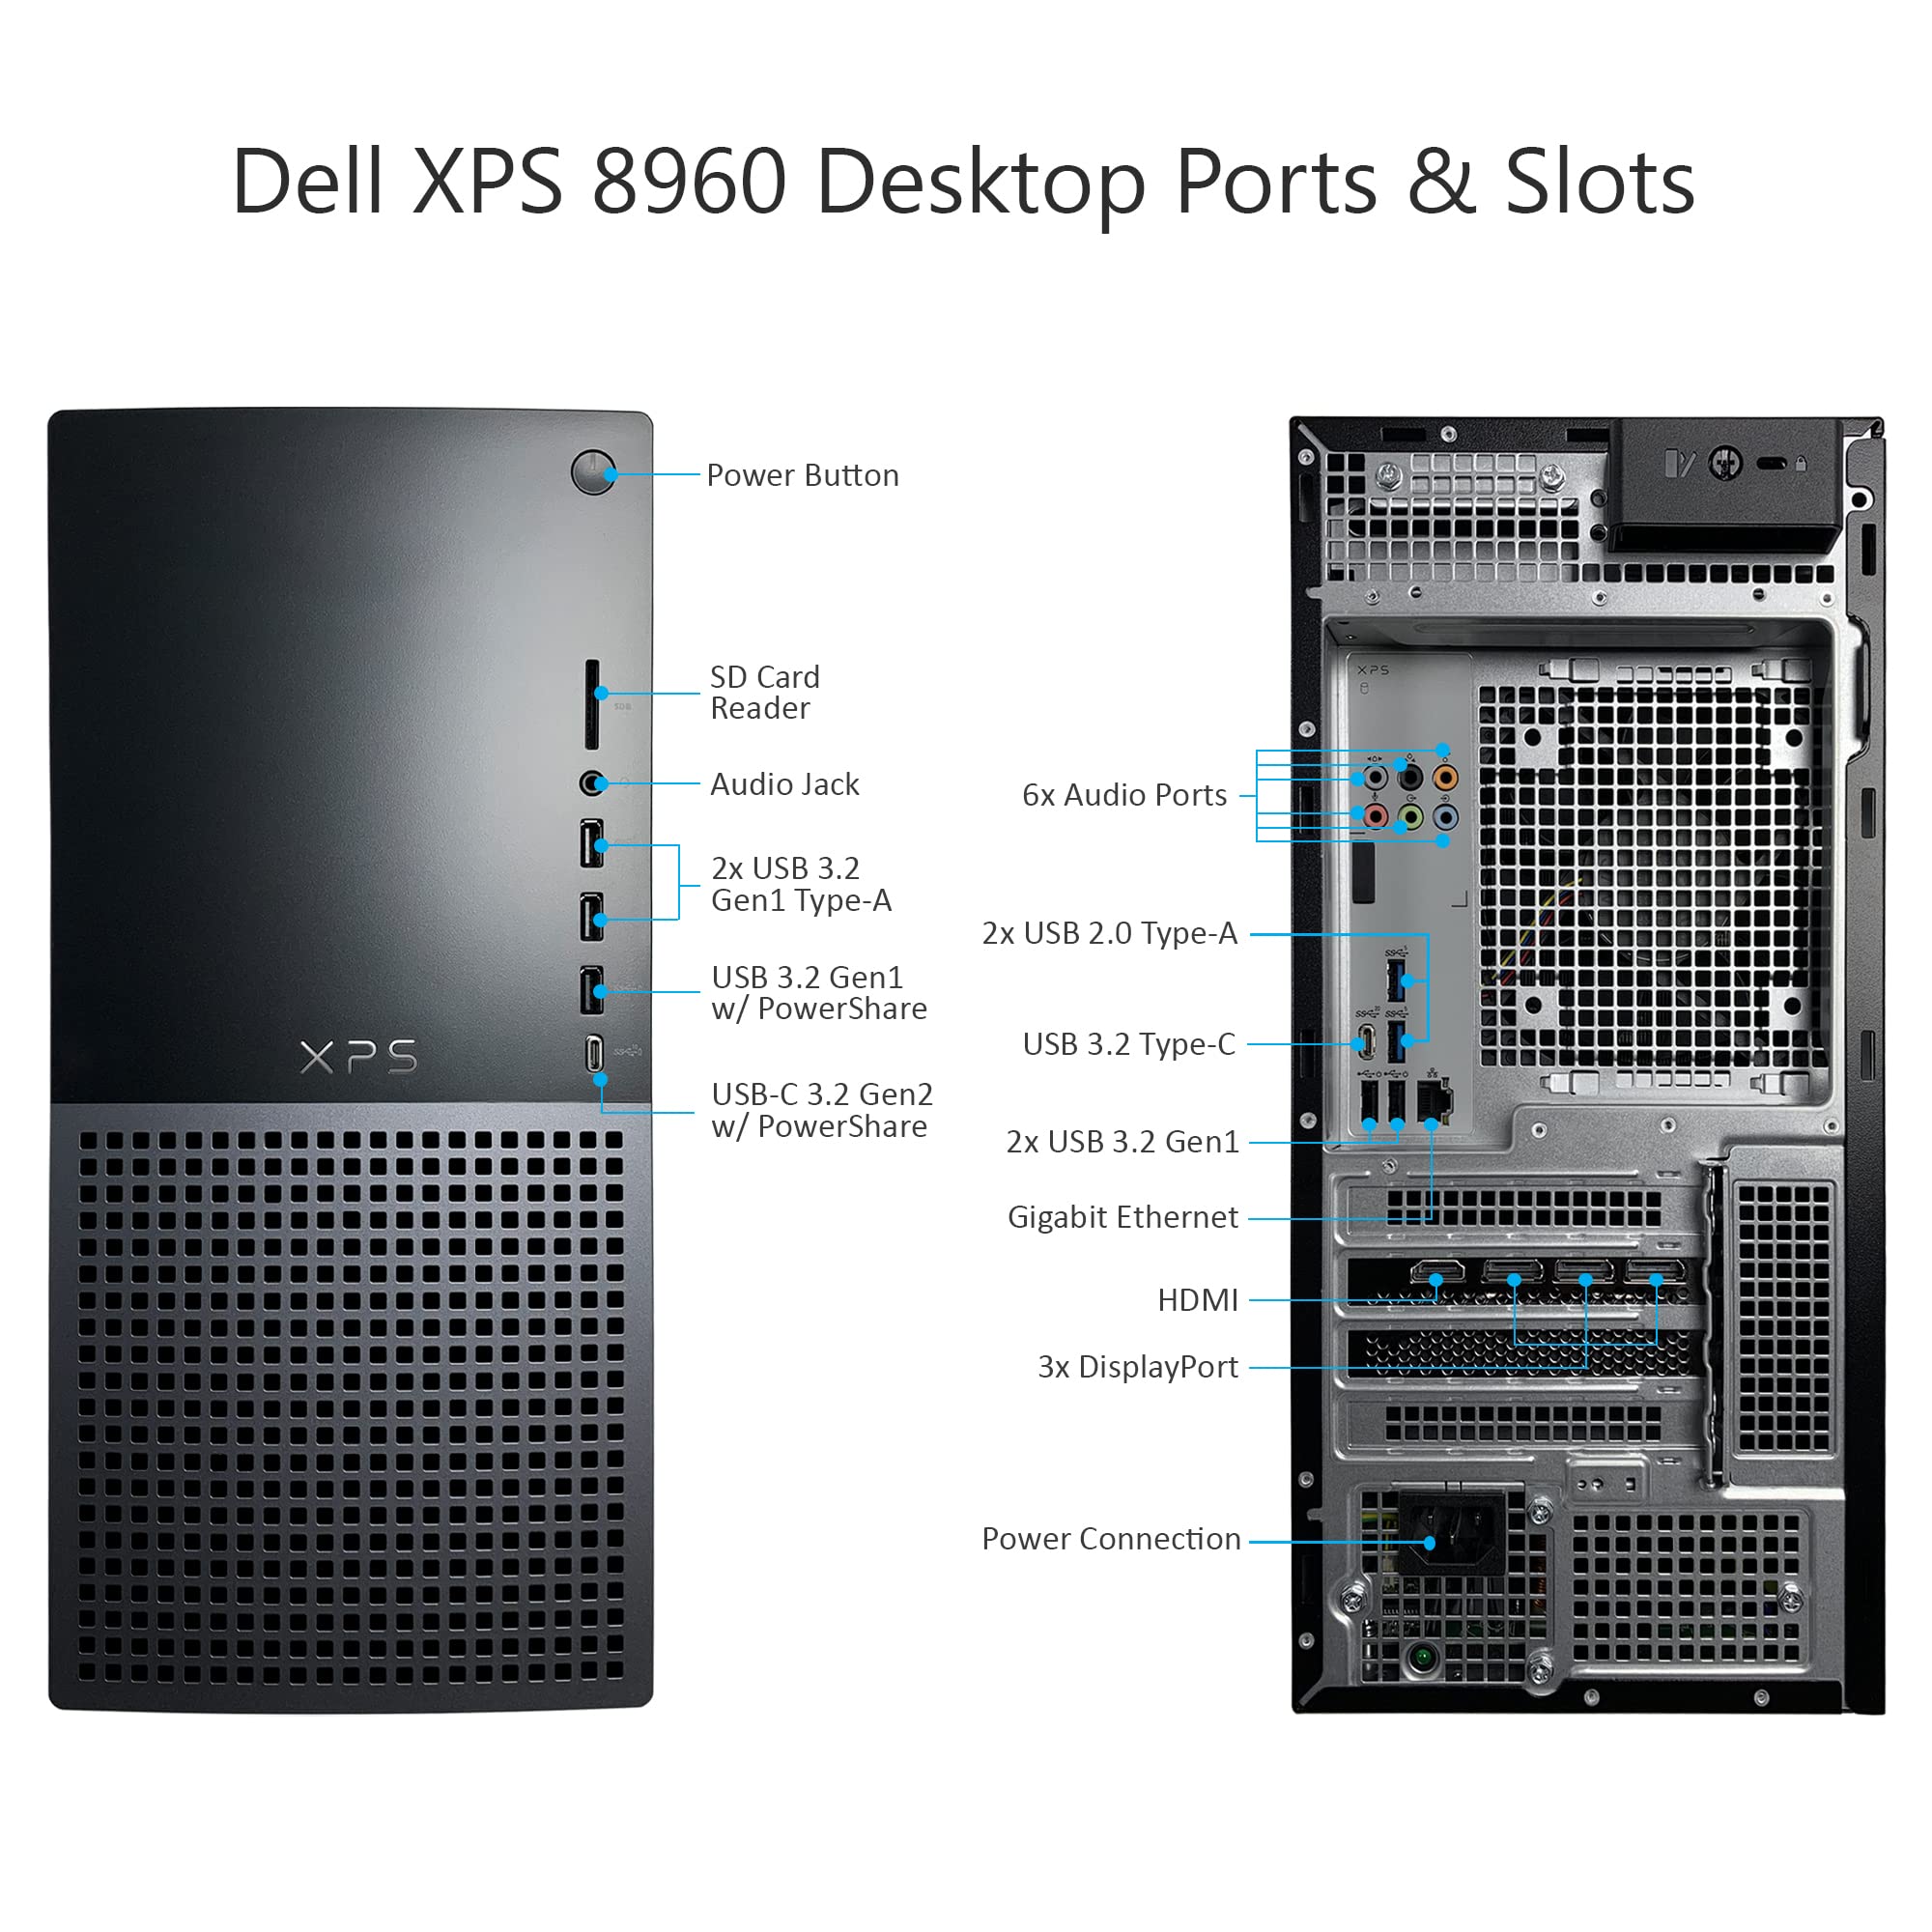 Dell XPS 8960 Gaming Desktop Computer - 13th Gen Intel Core i9-13900K 24-Core up to 5.80 GHz CPU, 64GB DDR5 RAM, 2TB NVMe SSD + 2TB HDD, GeForce RTX 3070 8GB GDDR6, Killer Wi-Fi 6E, Windows 11 Pro